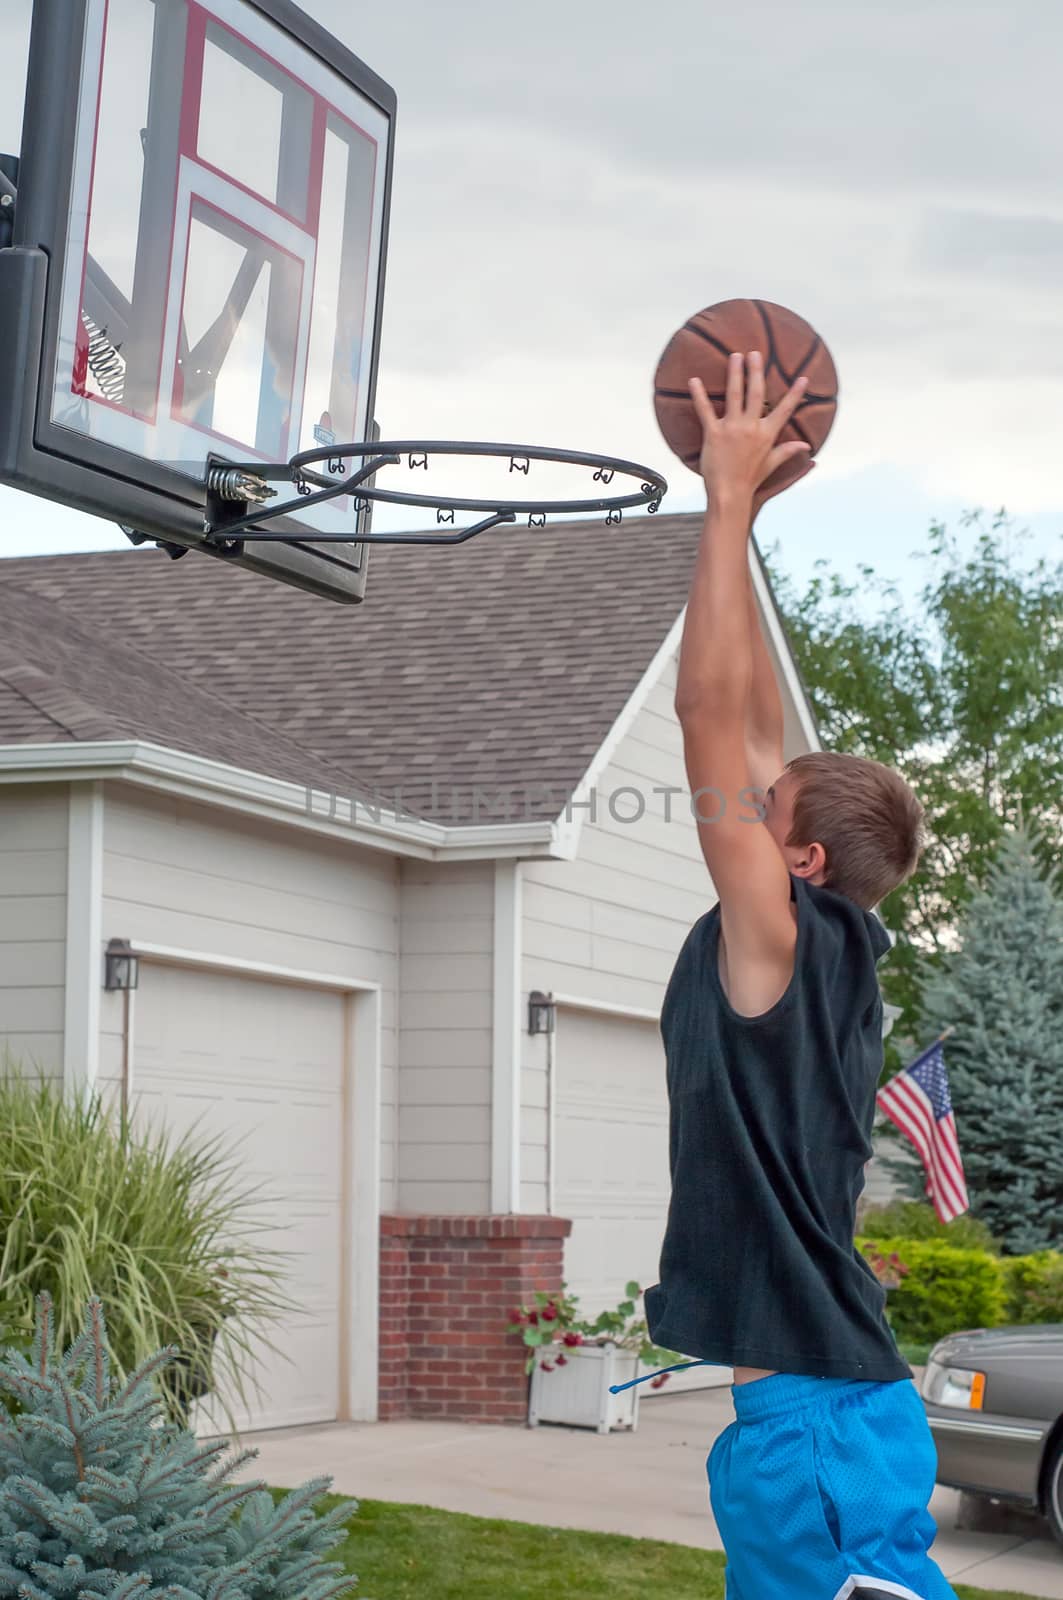 Teenage boy practicing basketball at home on his driveway in a suburban neighborhood.